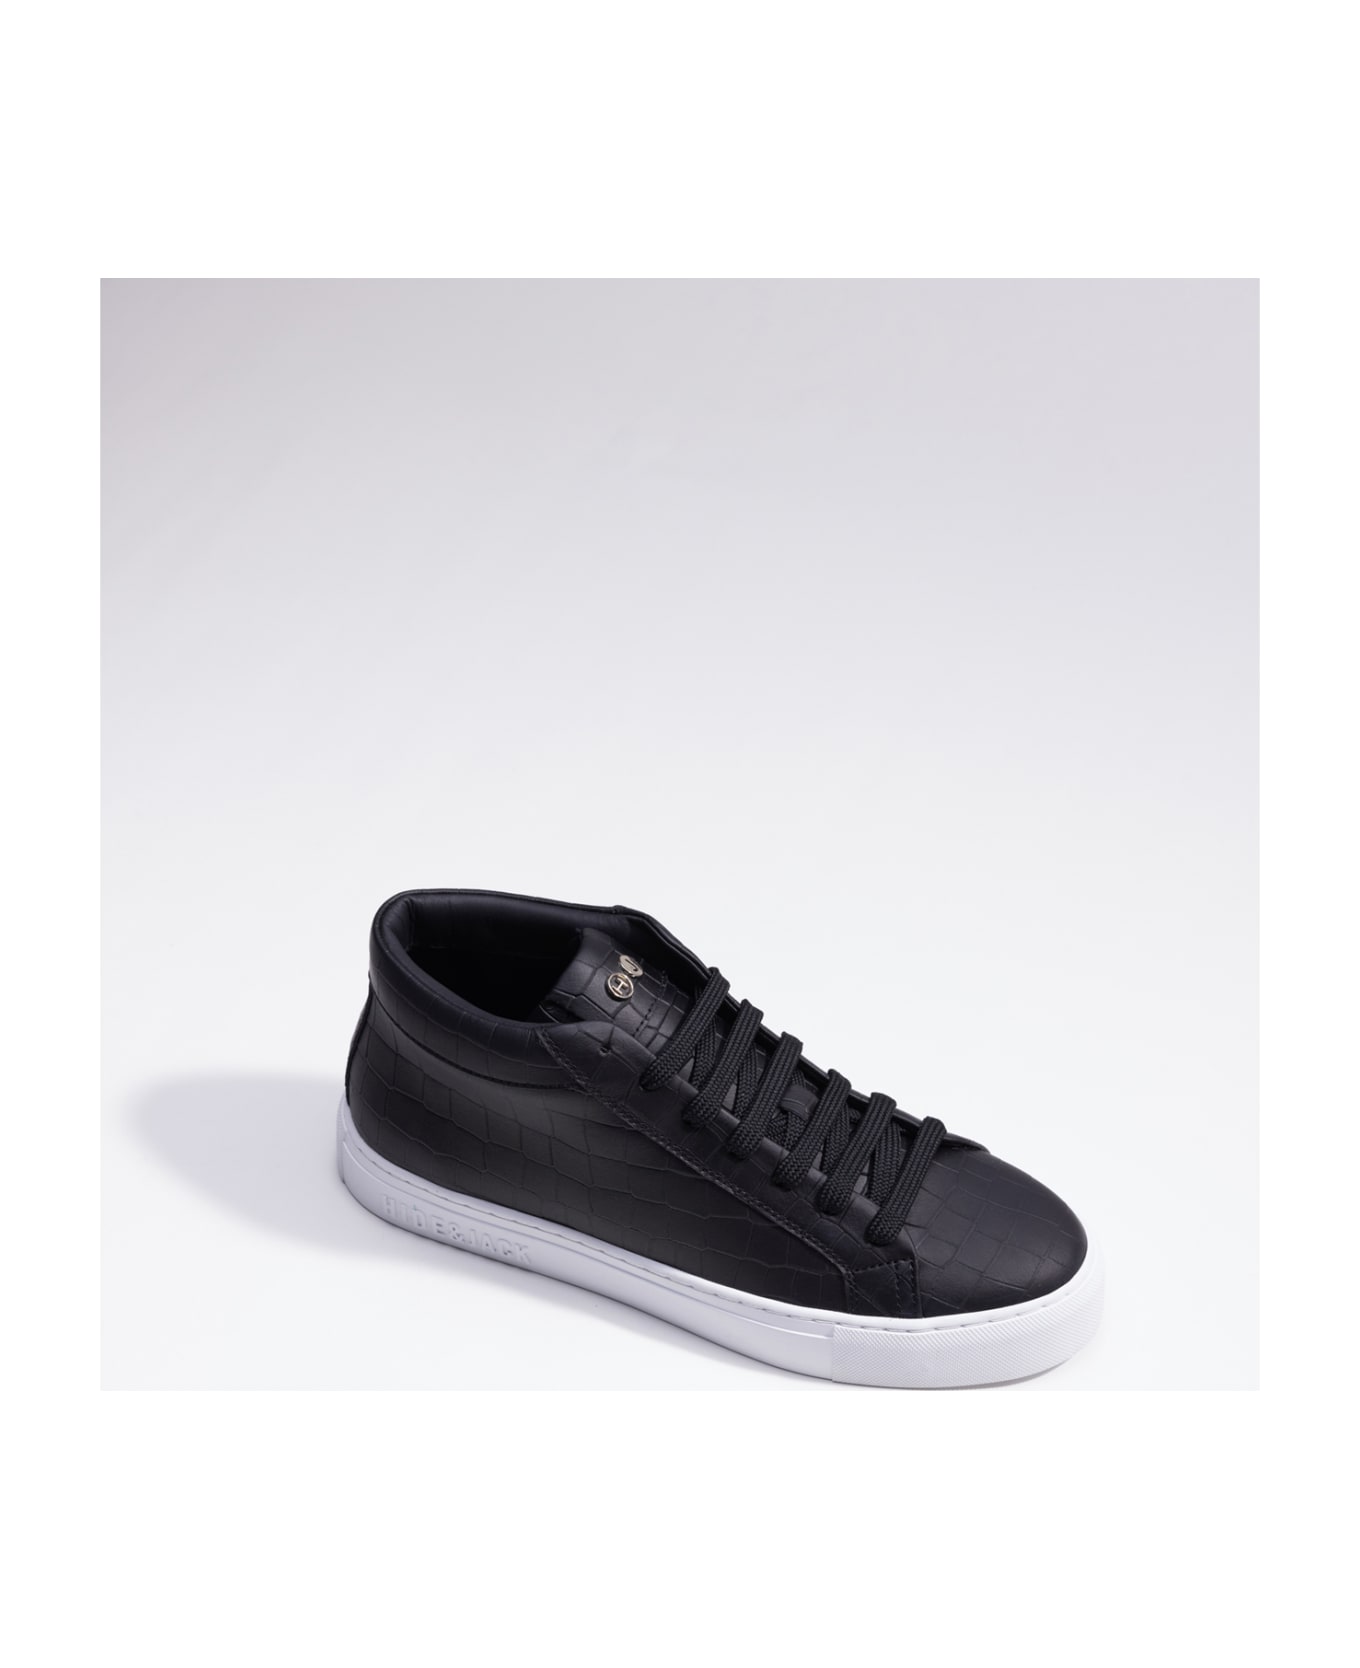 Hide&Jack High Top Sneaker - Essence Black White スニーカー